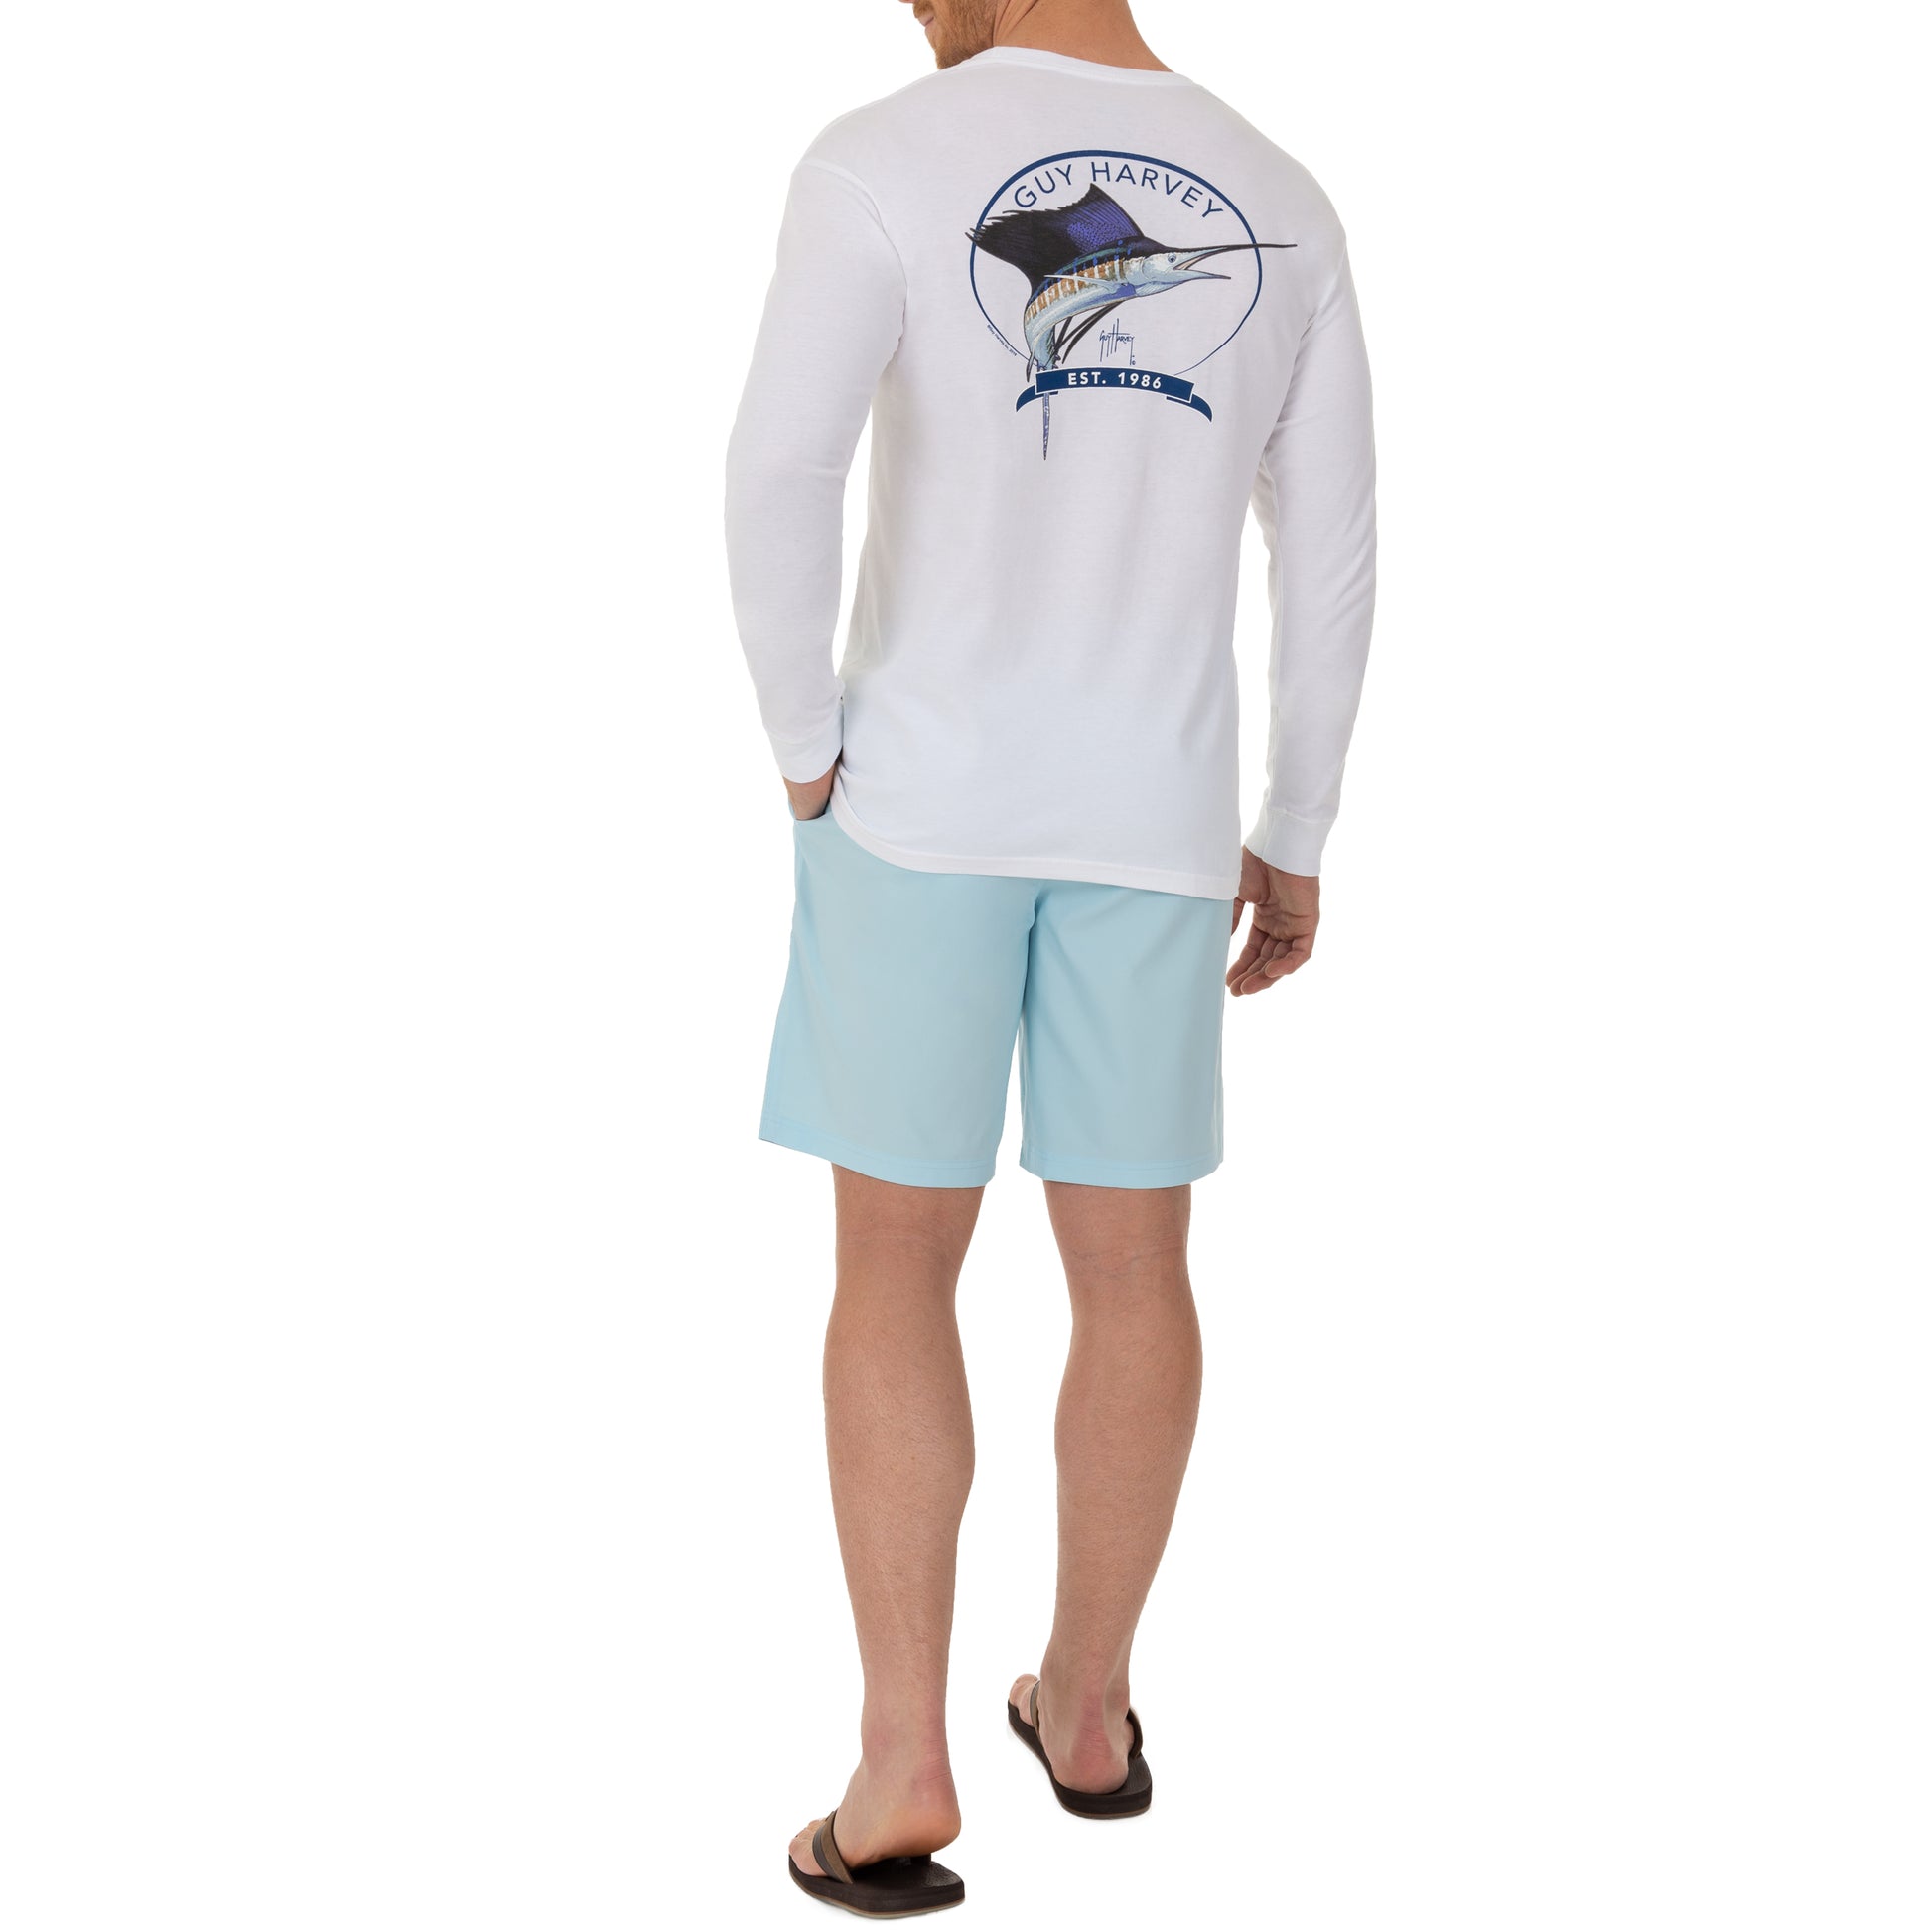 Guy Harvey Mens White Long Sleeve Fishing Shirt Size XL $10.00